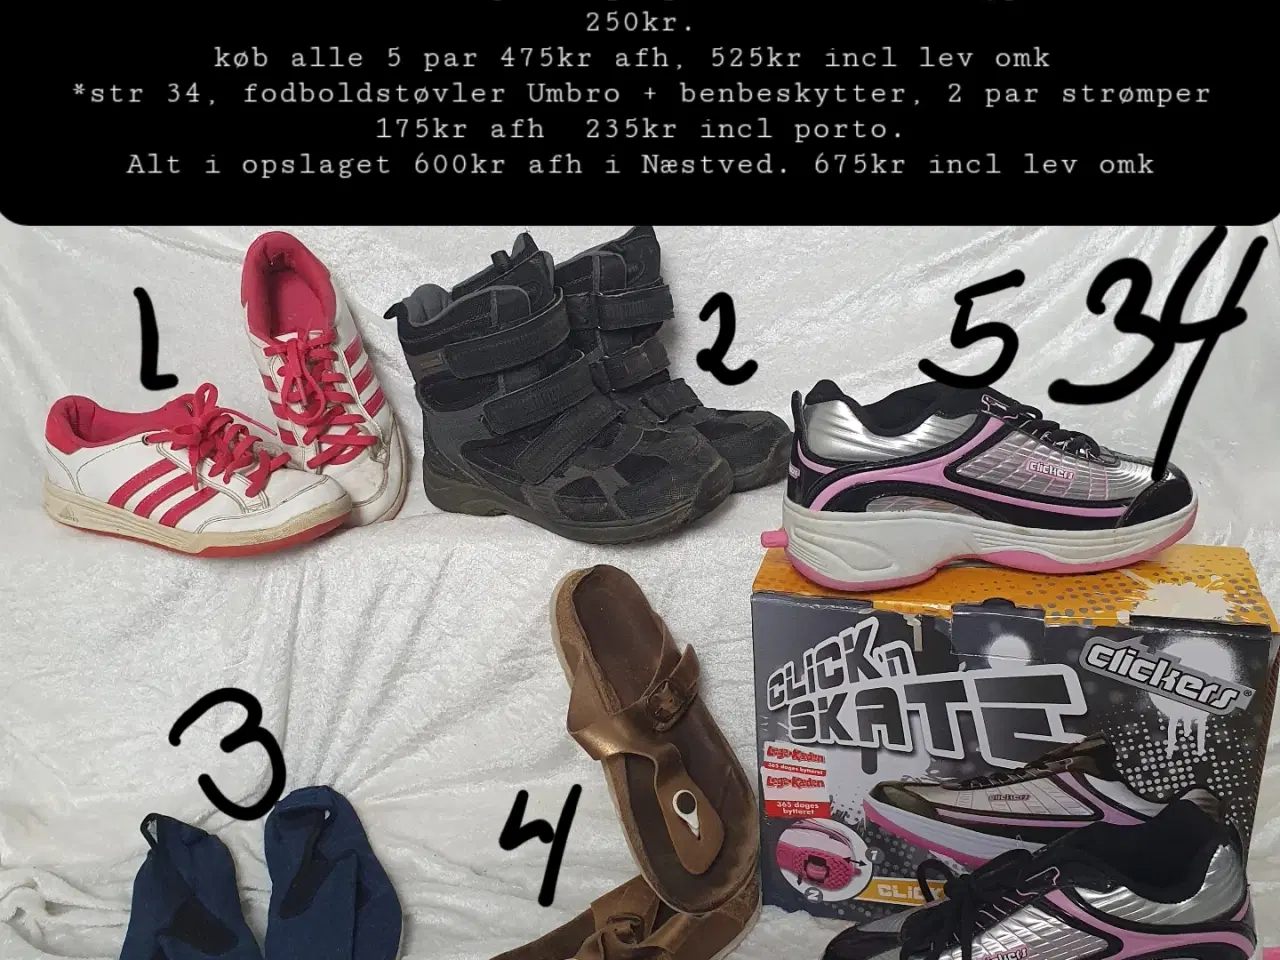 Billede 7 - Adidas kondisko str 34 pige+ andre sko